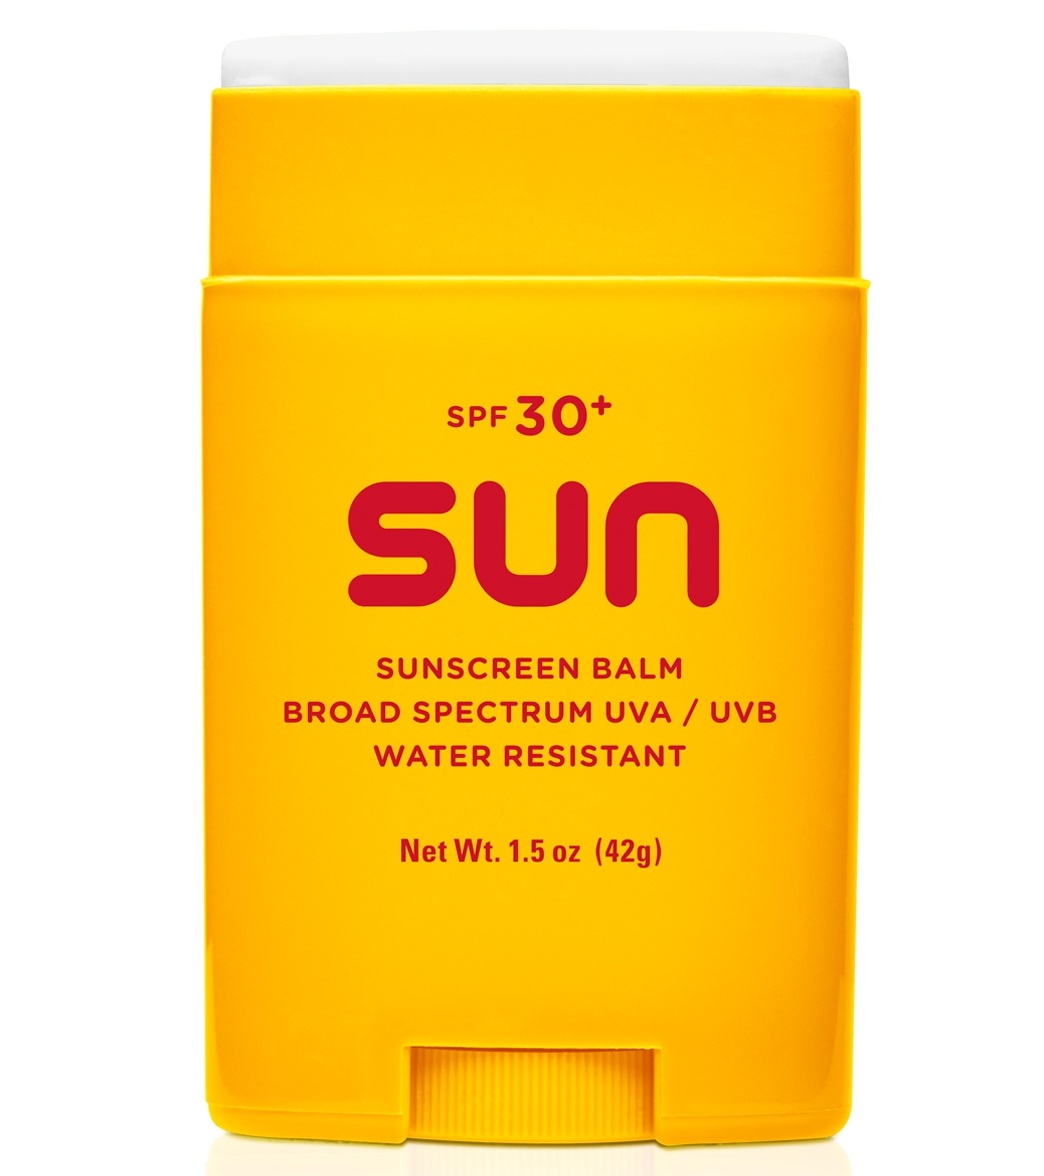 Body Glide Anti Chafing Sunscreen Balm 1.5 oz